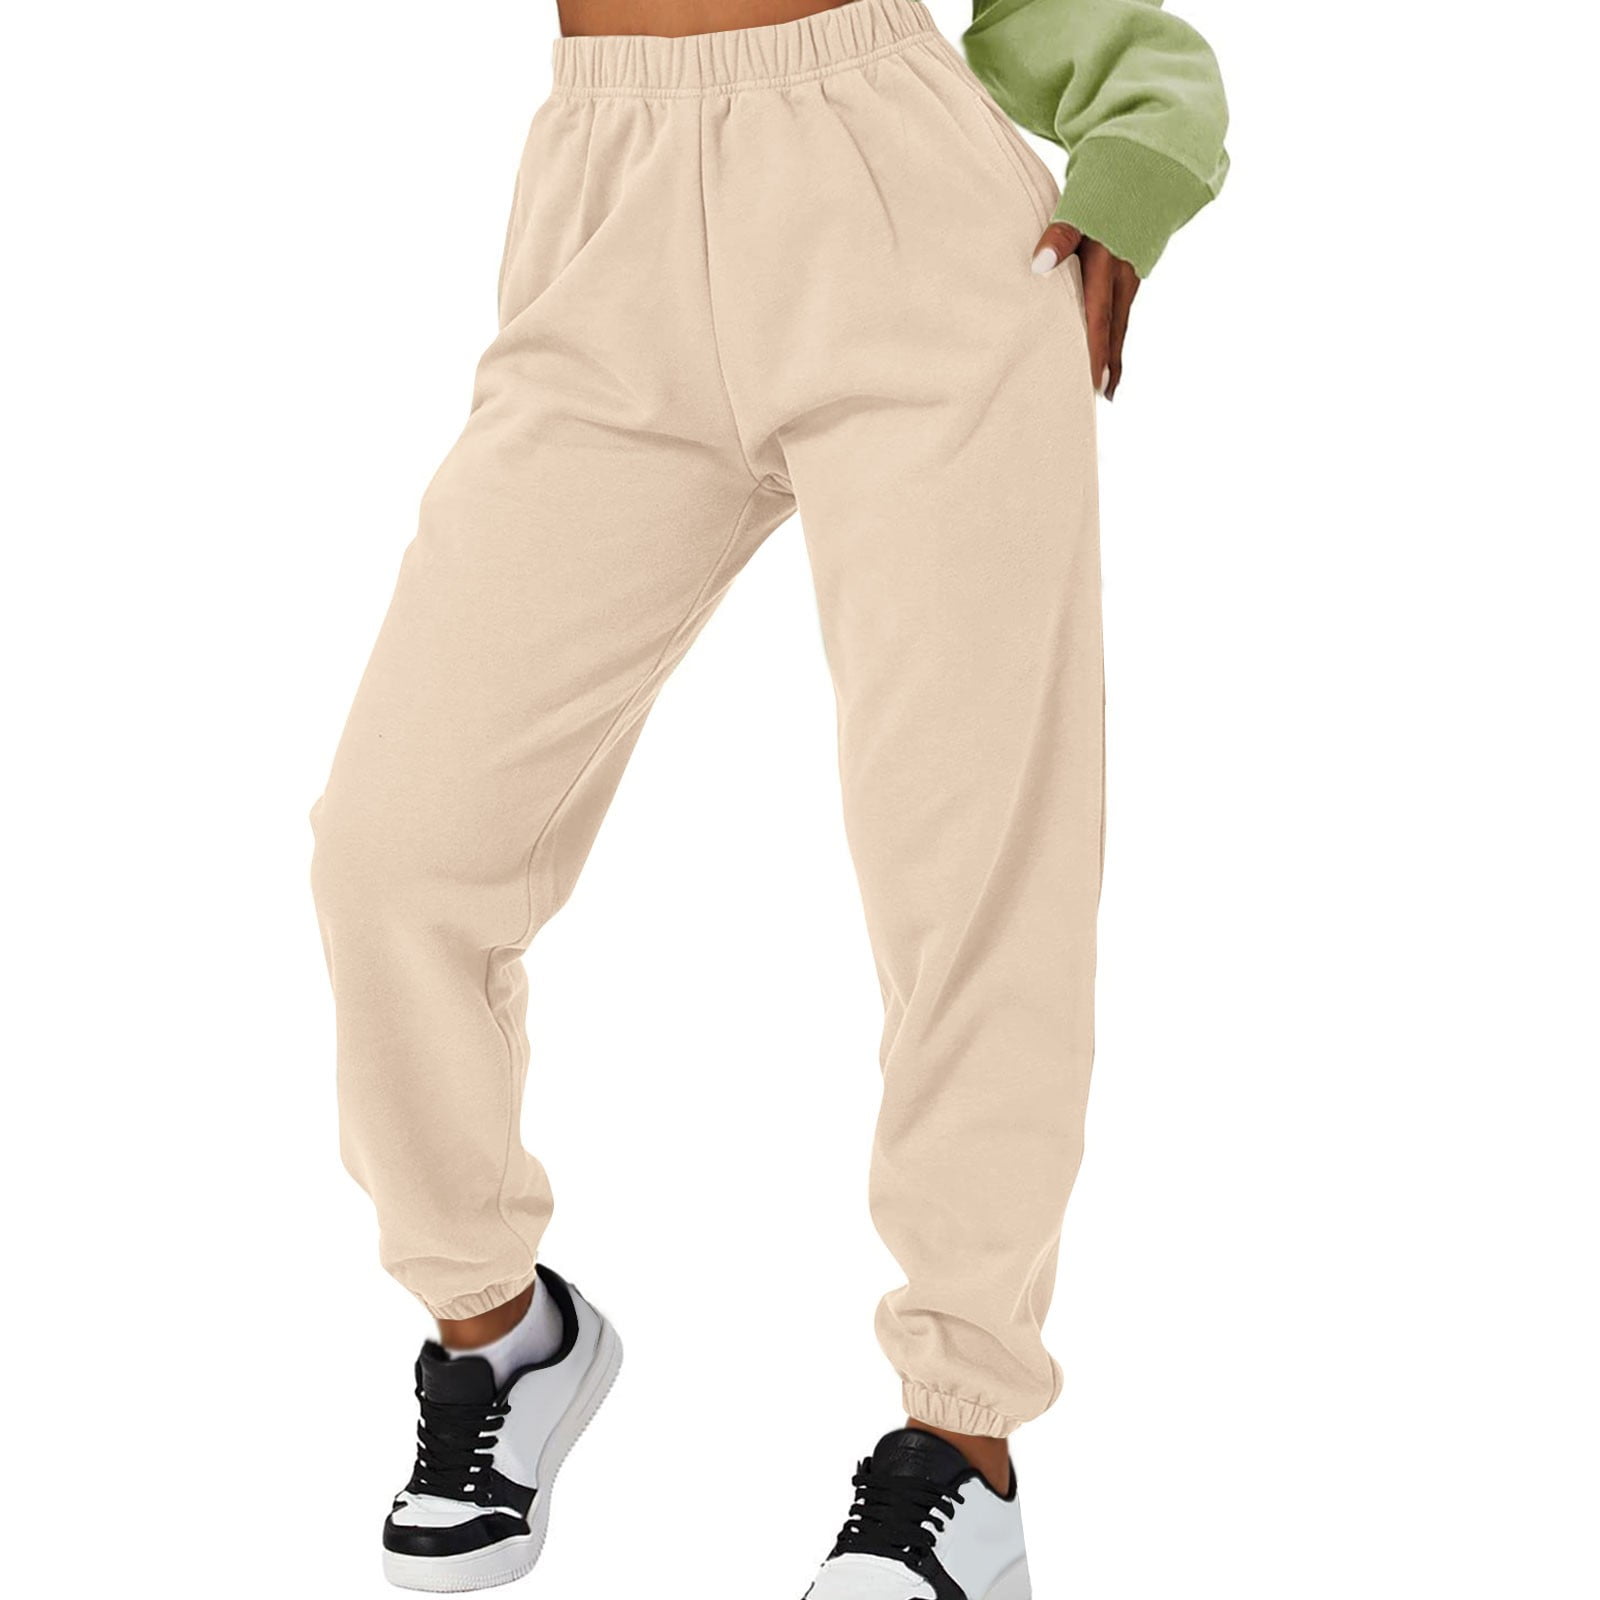 Susanny Petite Sweatpants for Women with Pockets Elastic Waist